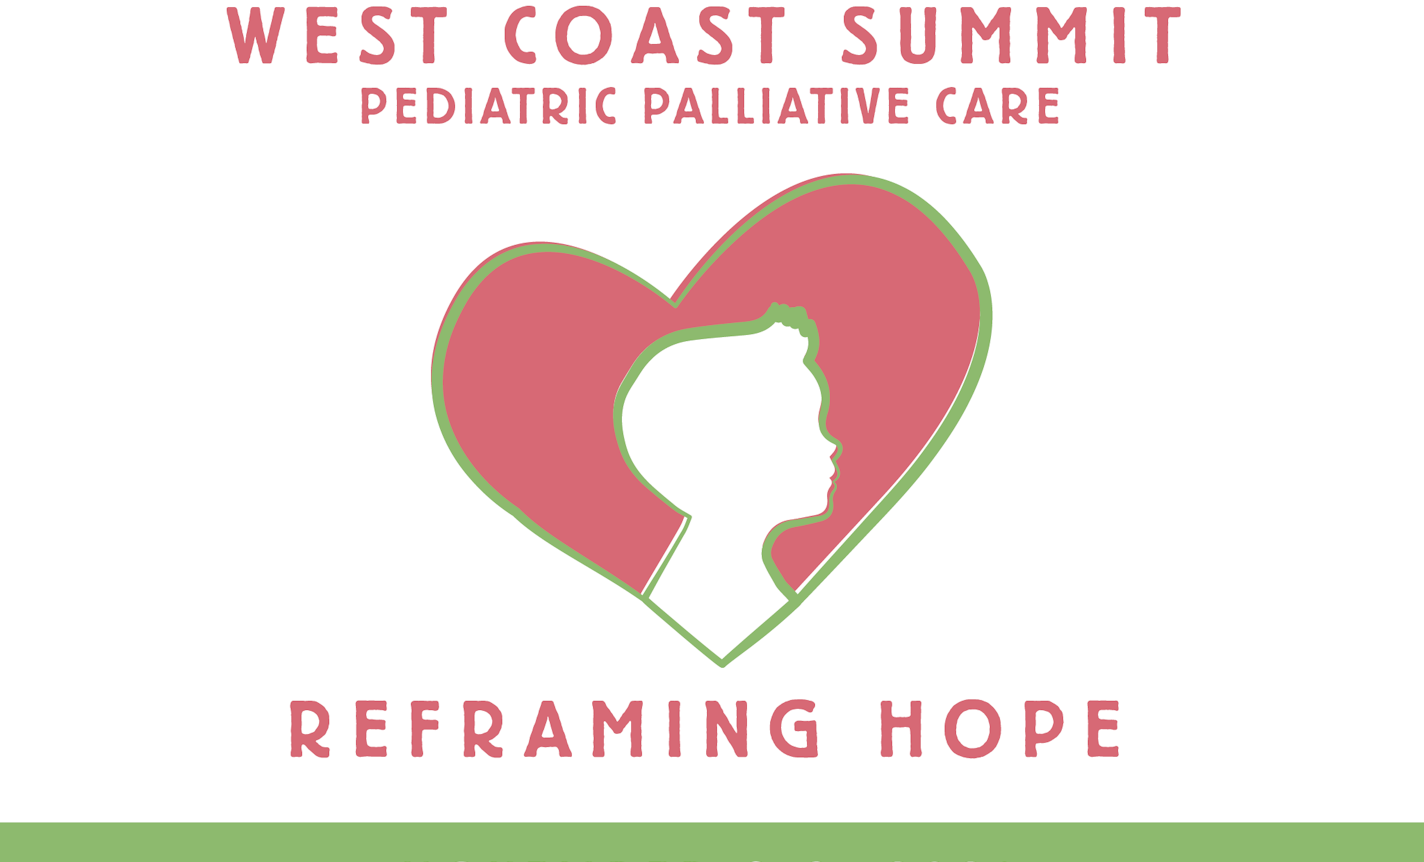 West Coast Pediatric Palliative Care Summit